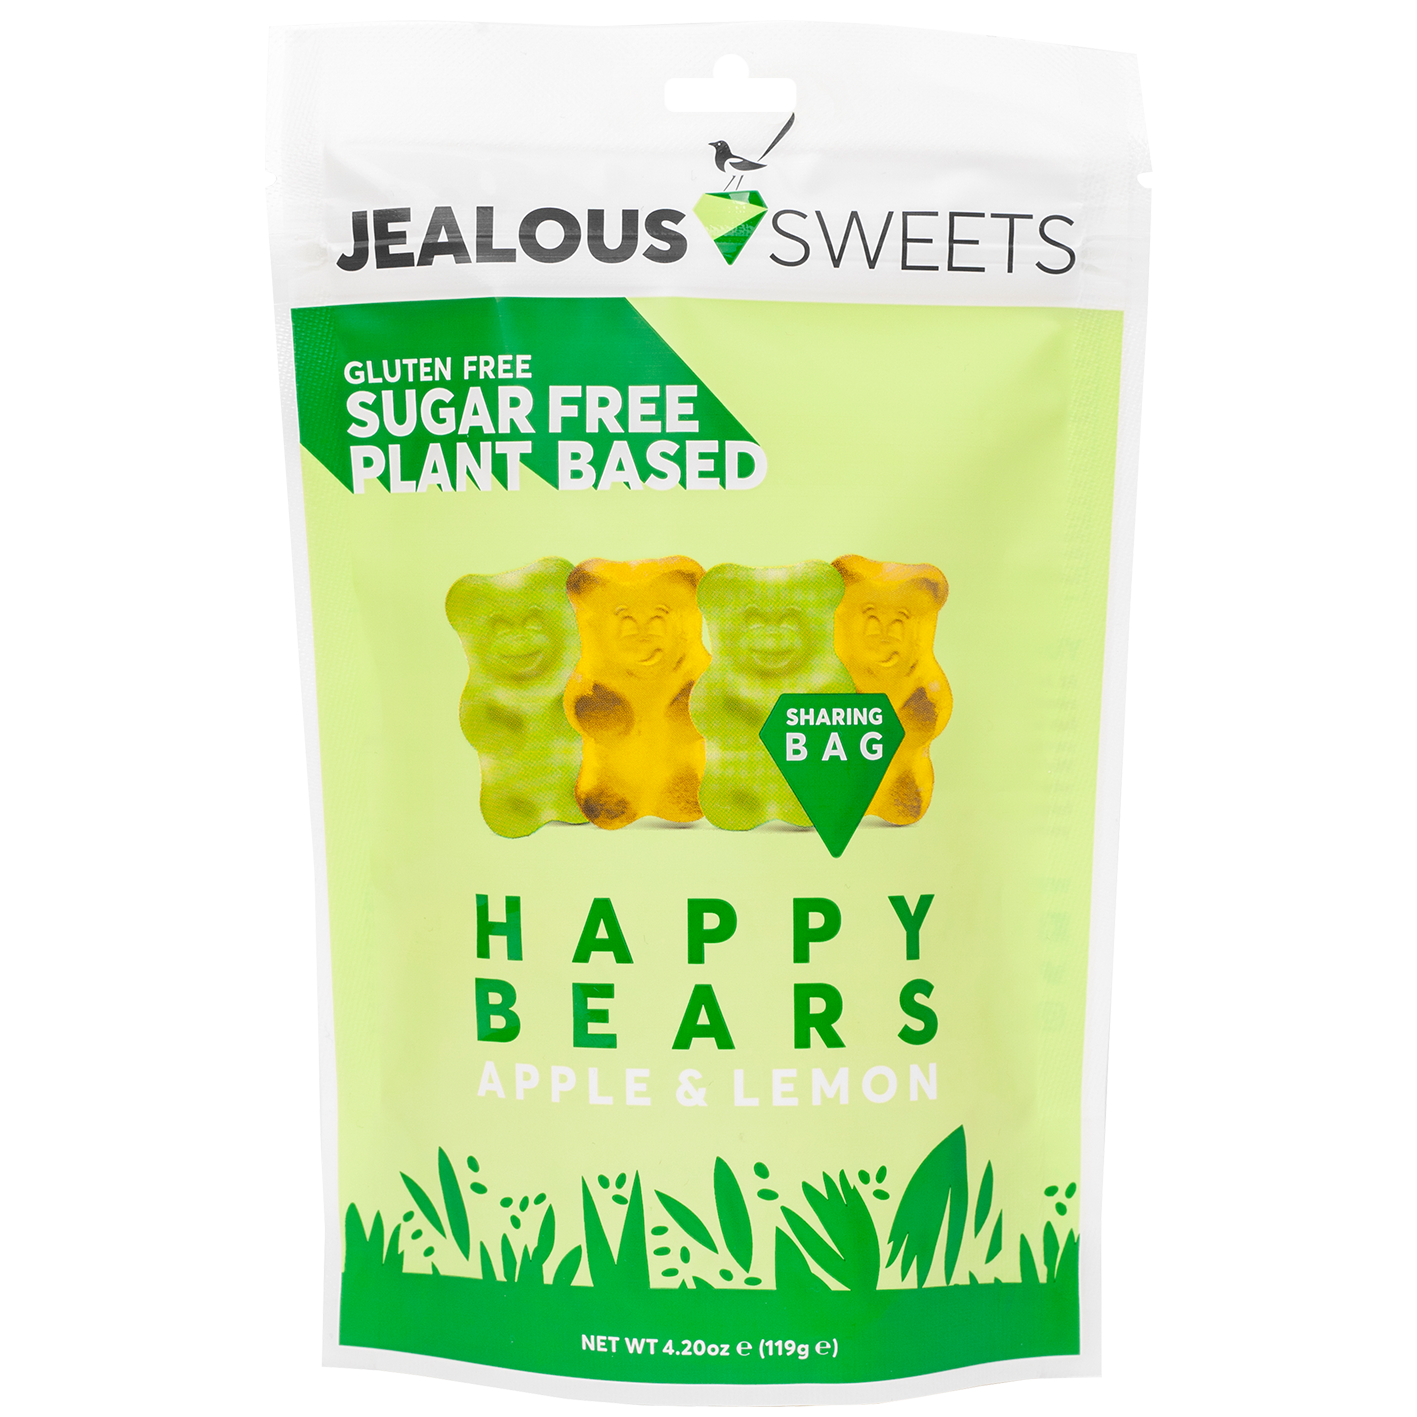 Jealous Sweets Happy Bears 7 units per case 4.2 oz